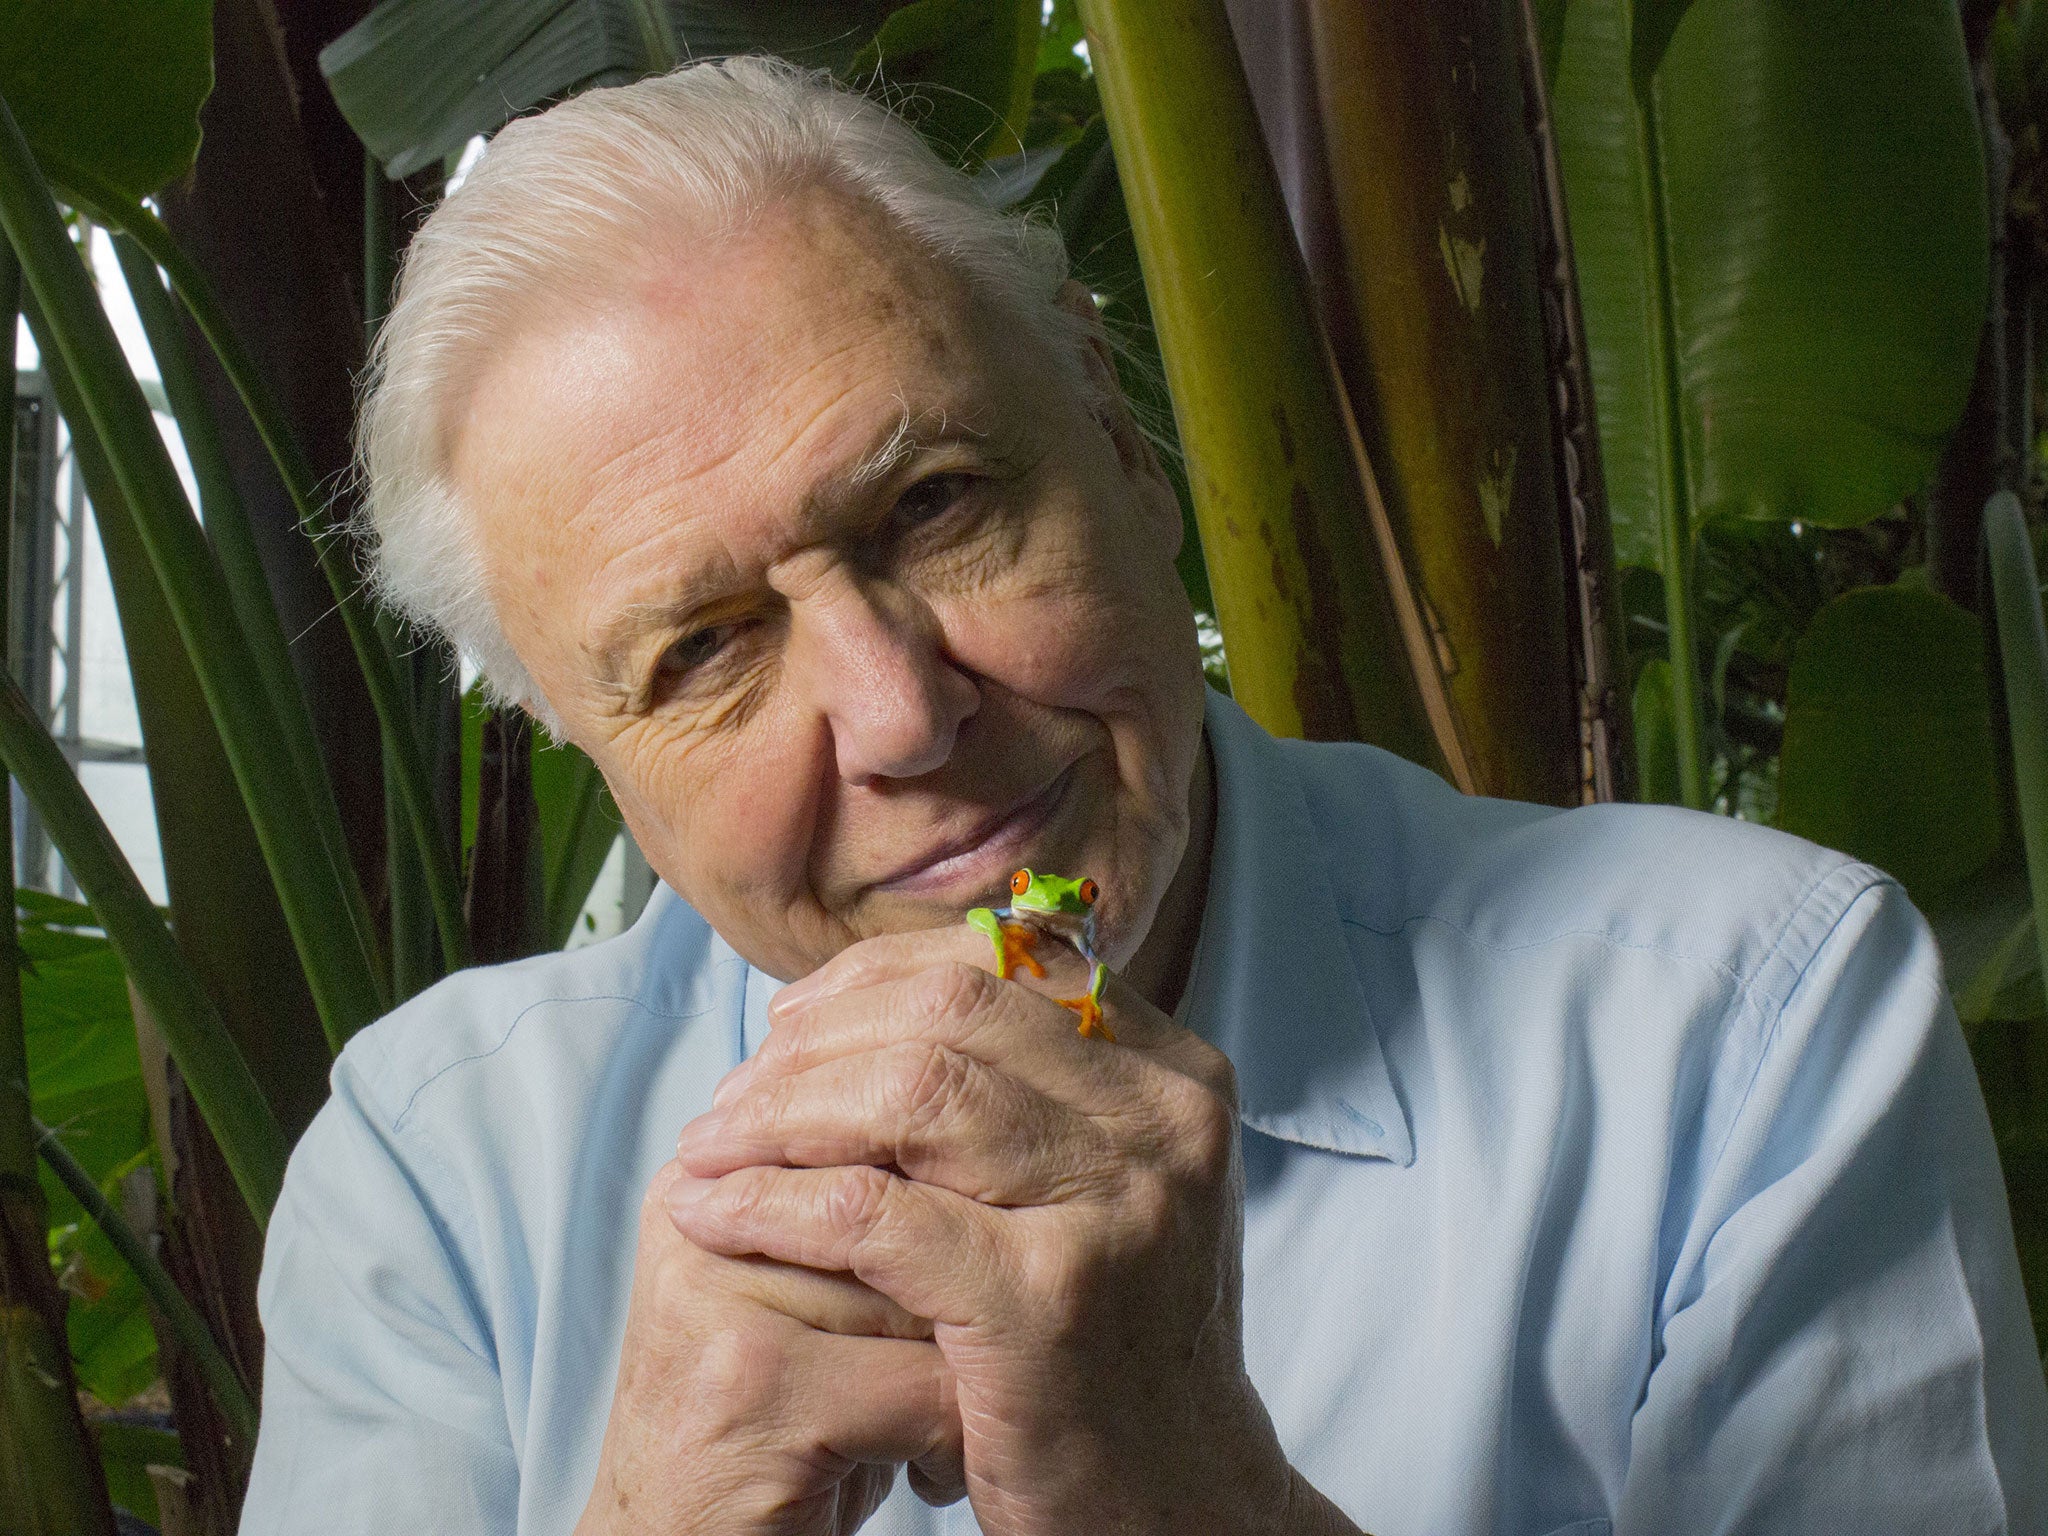 Naturalist David Attenborough presents 'Attenborough’s Fabulous Frogs', the final instalment of the current 'Natural World' series